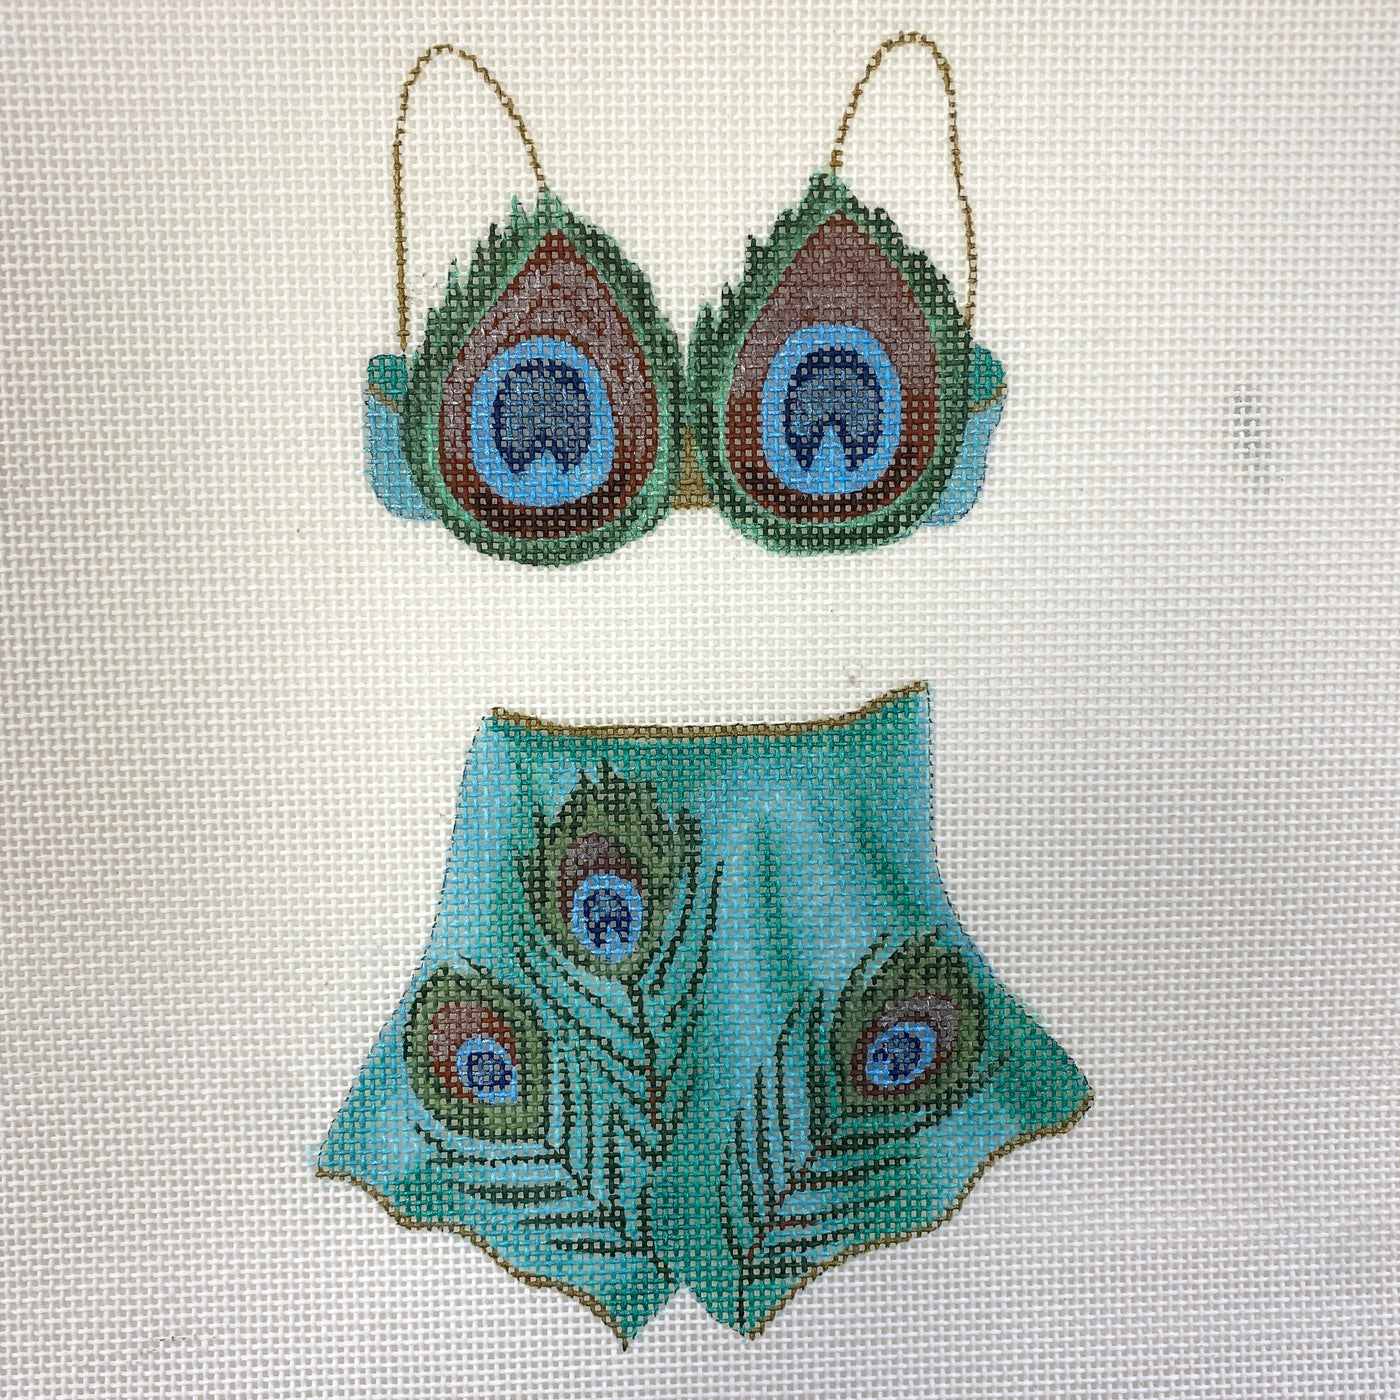 Peacock Feathers Bra & Pants Set Needlepoint Canvas – Bargello